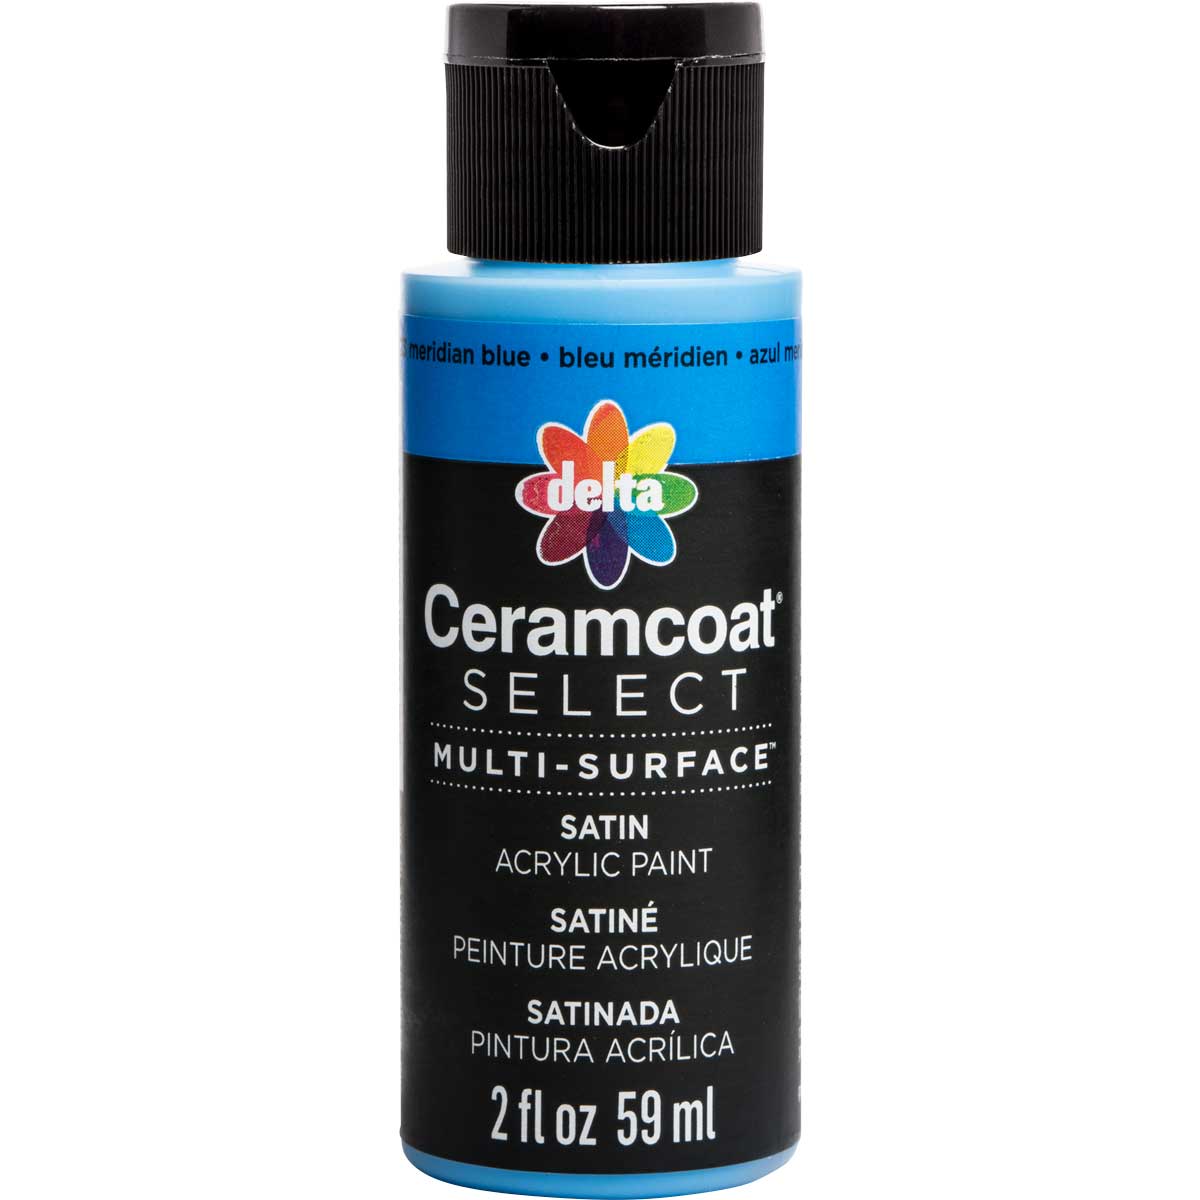 Delta Ceramcoat ® Select Multi-Surface Acrylic Paint - Satin - Meridian Blue, 2 oz. - 04023